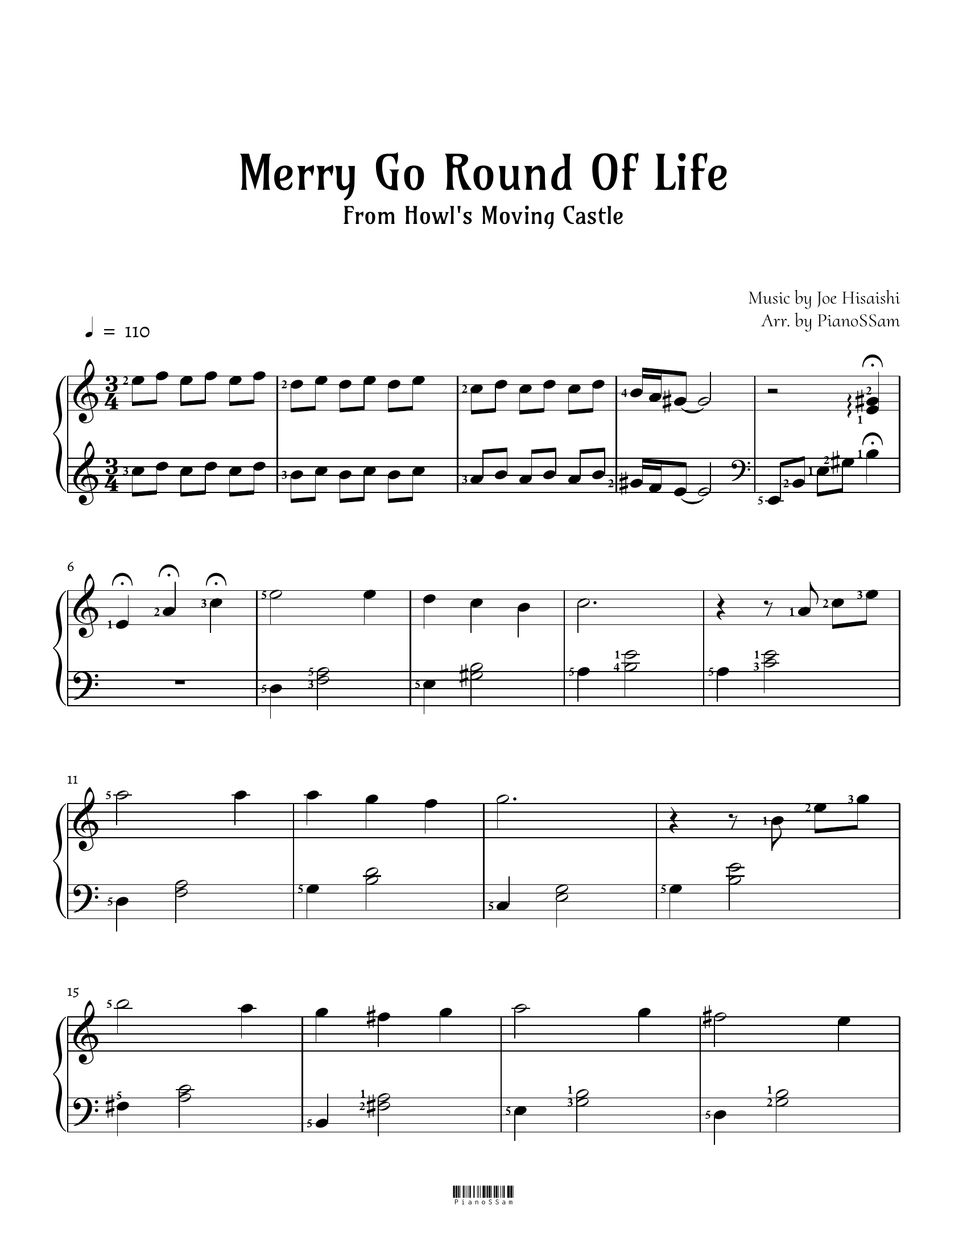 Joe Hisaishi - [Intermediate] Merry go round of life-人生のメリーゴーランド (인생의 회전목마) | Piano Arrangement (하울의 움직이는 성) by PianoSSam